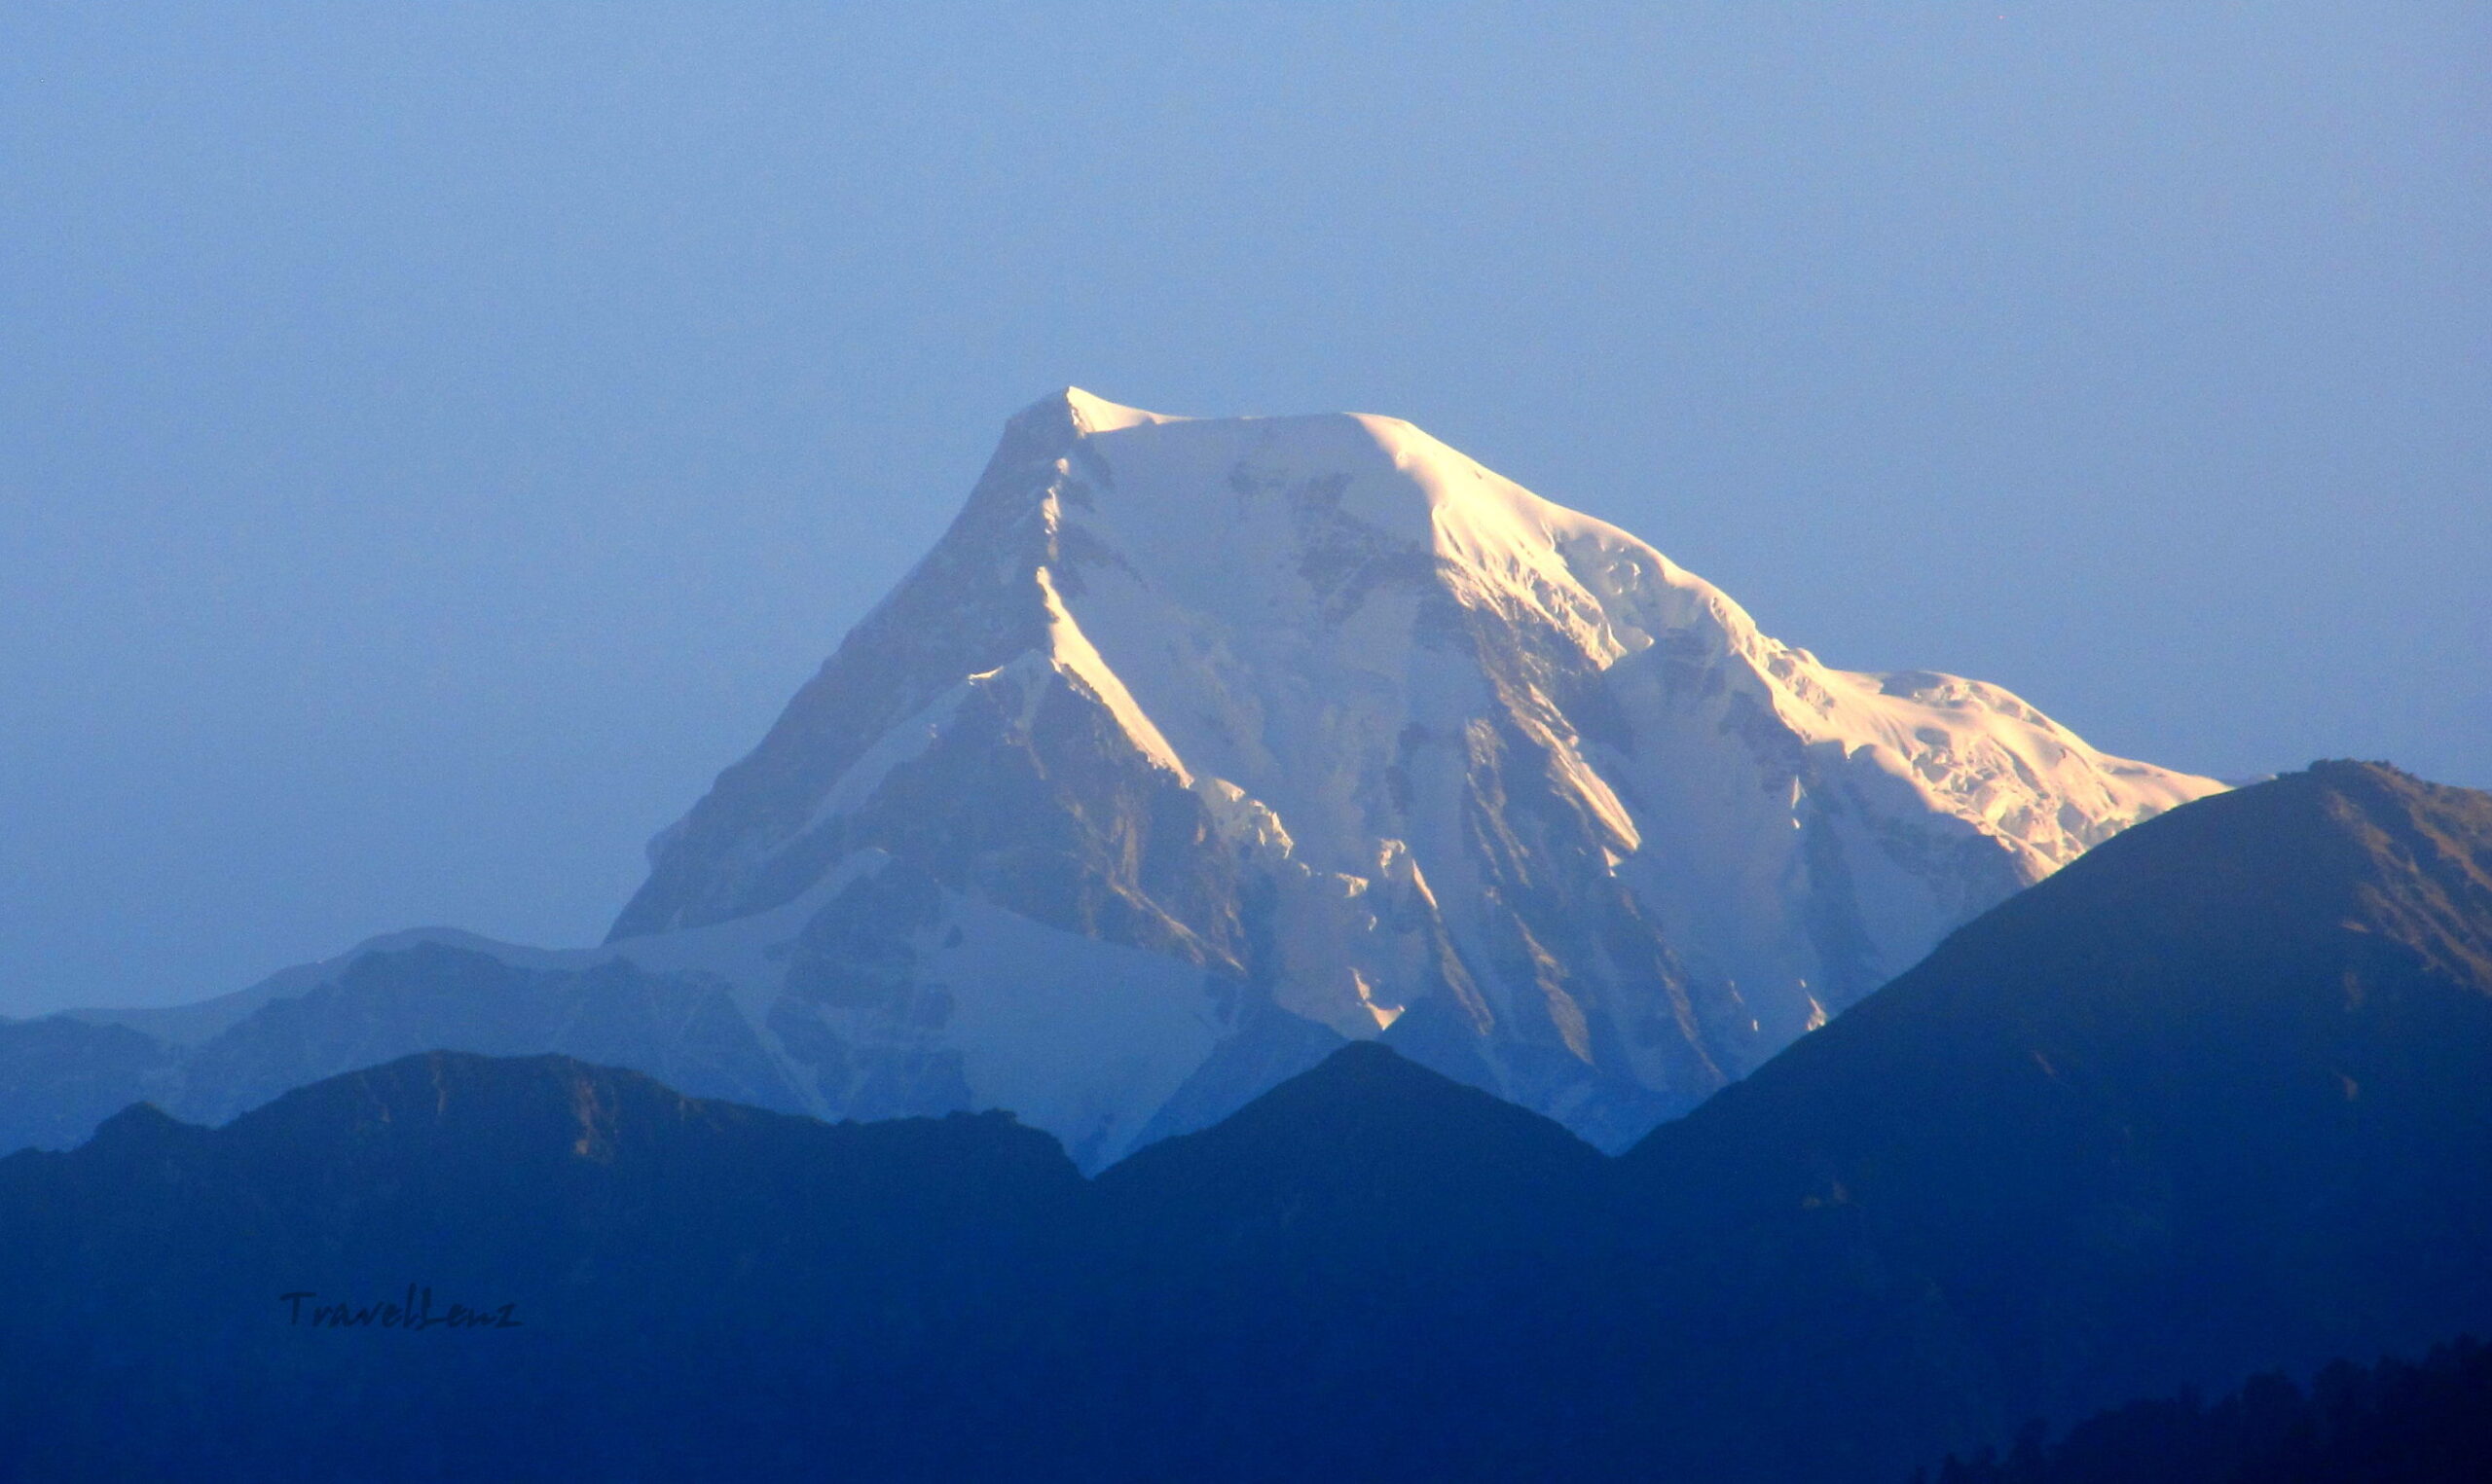 The snow-capped Nanda Ghunti mountain peak